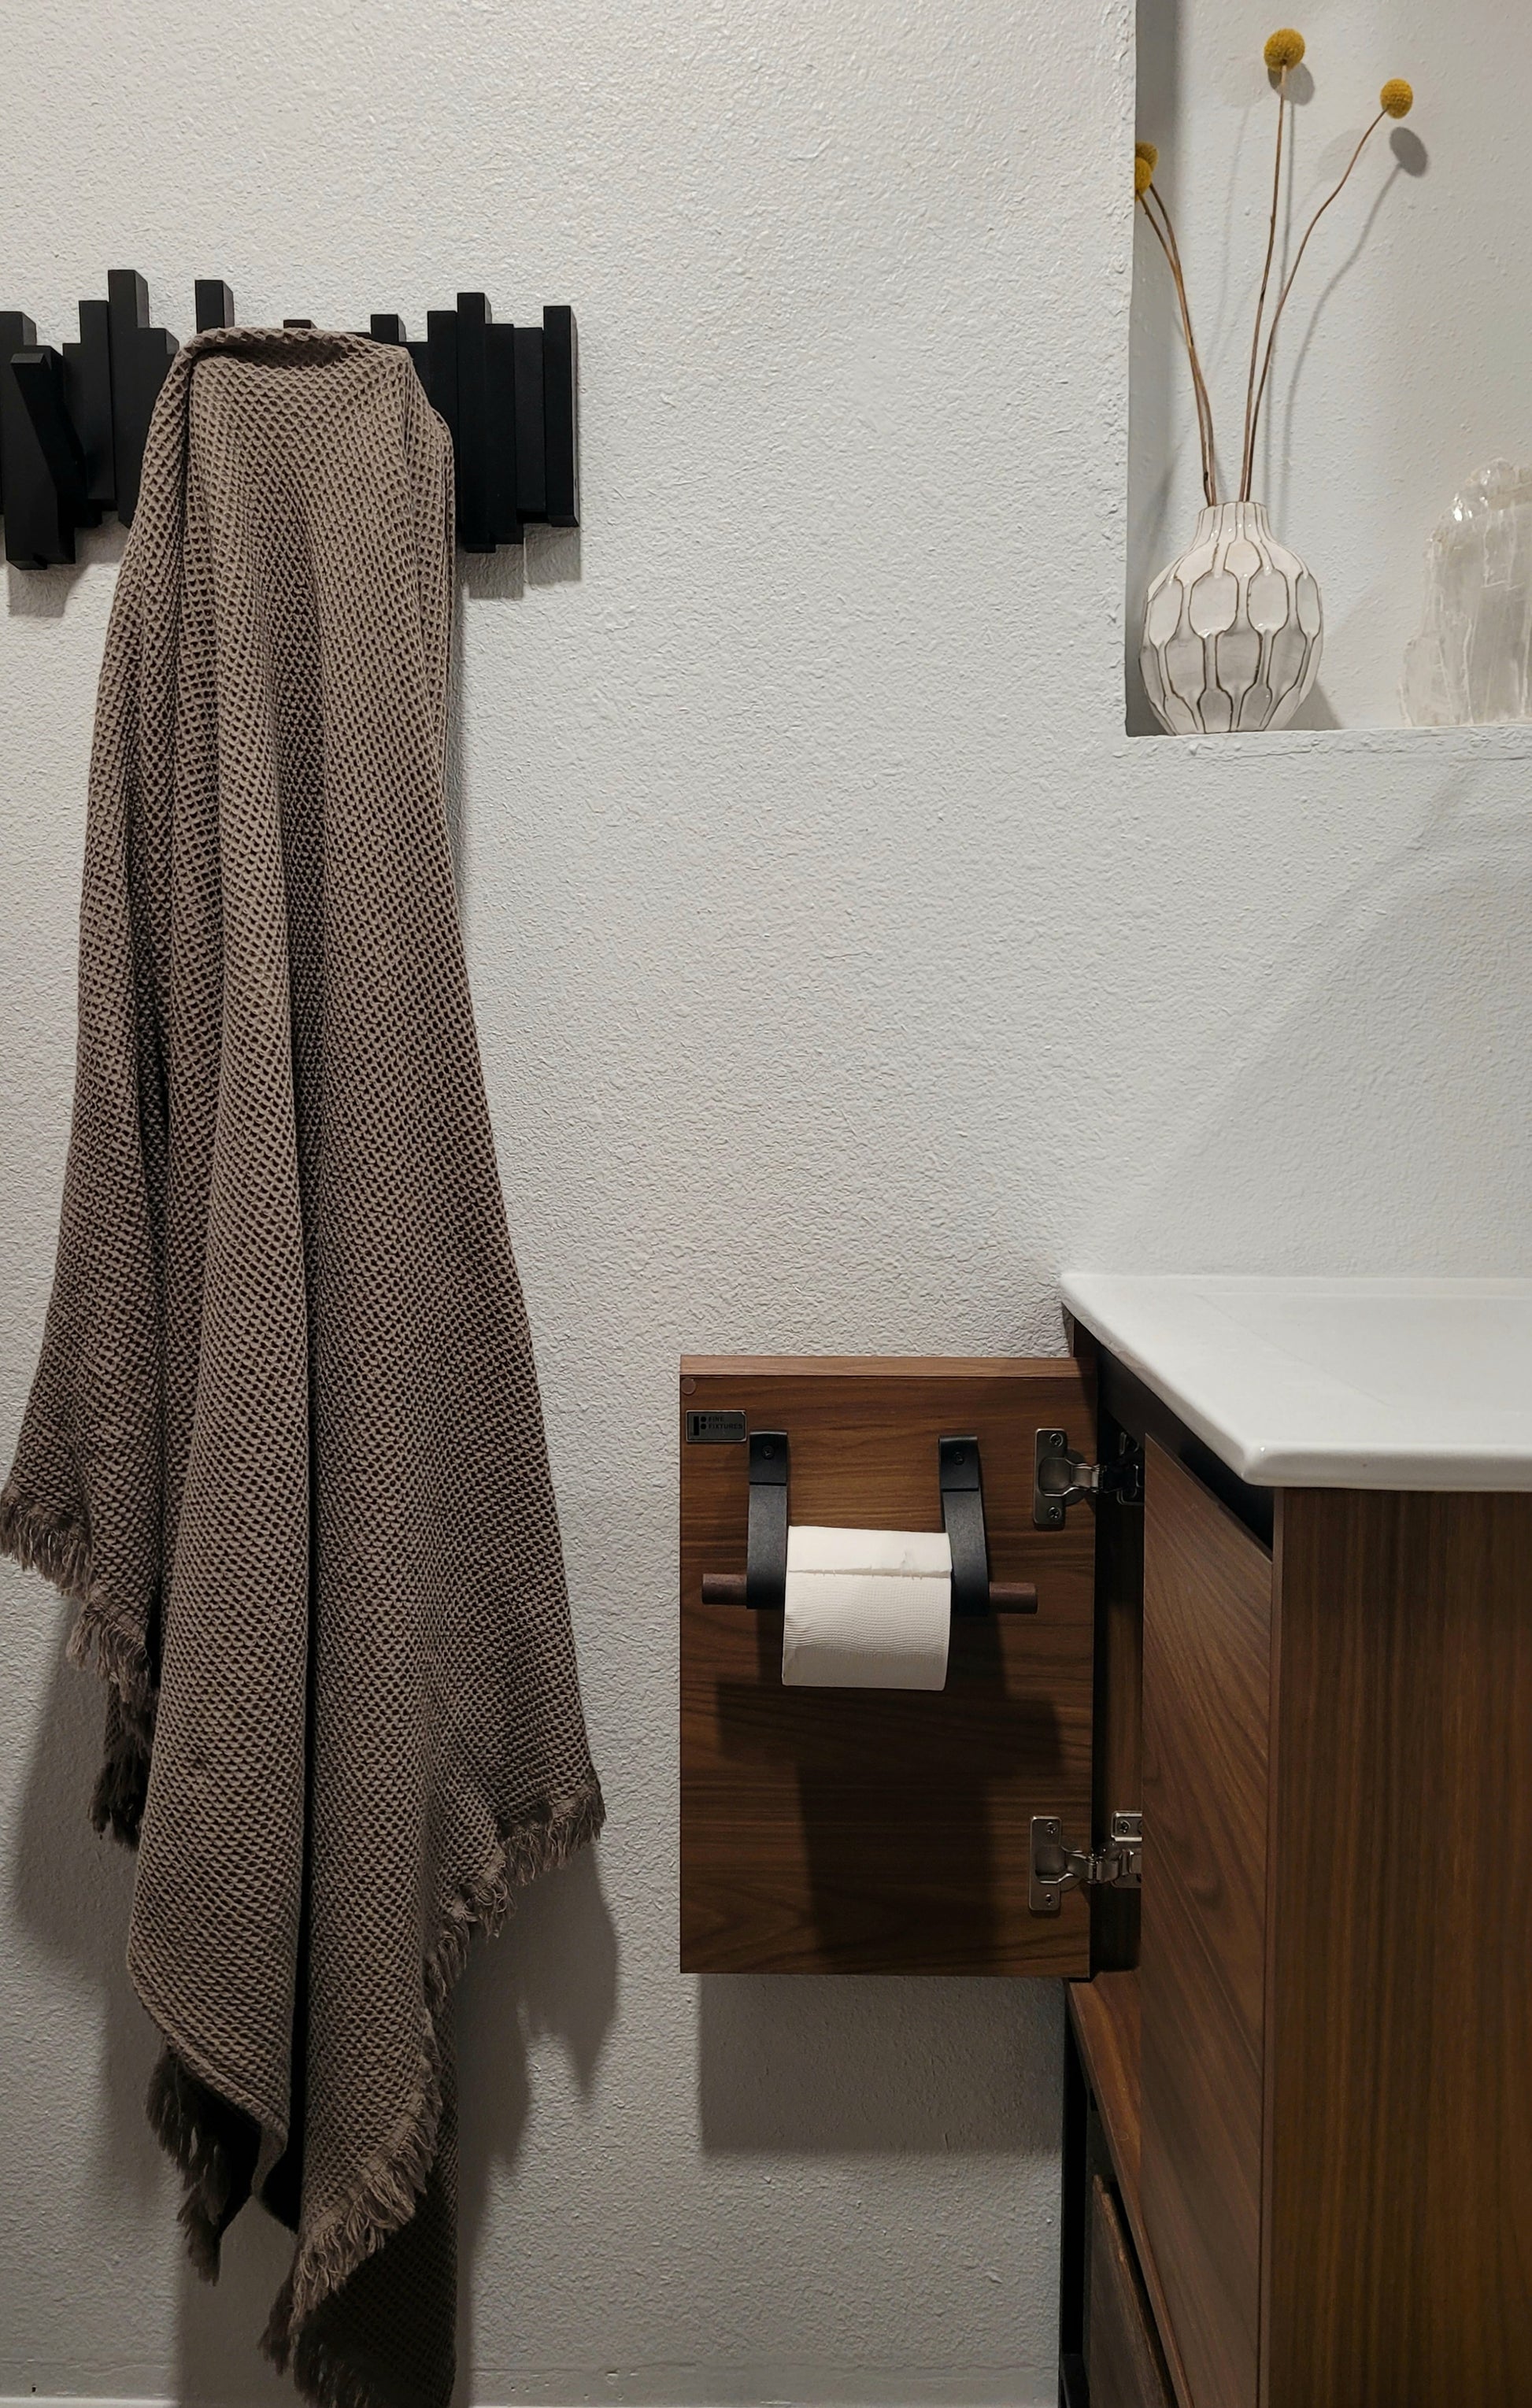 Kristina Dam Studio - Dowel Toilet paper holder, stainless steel / walnut